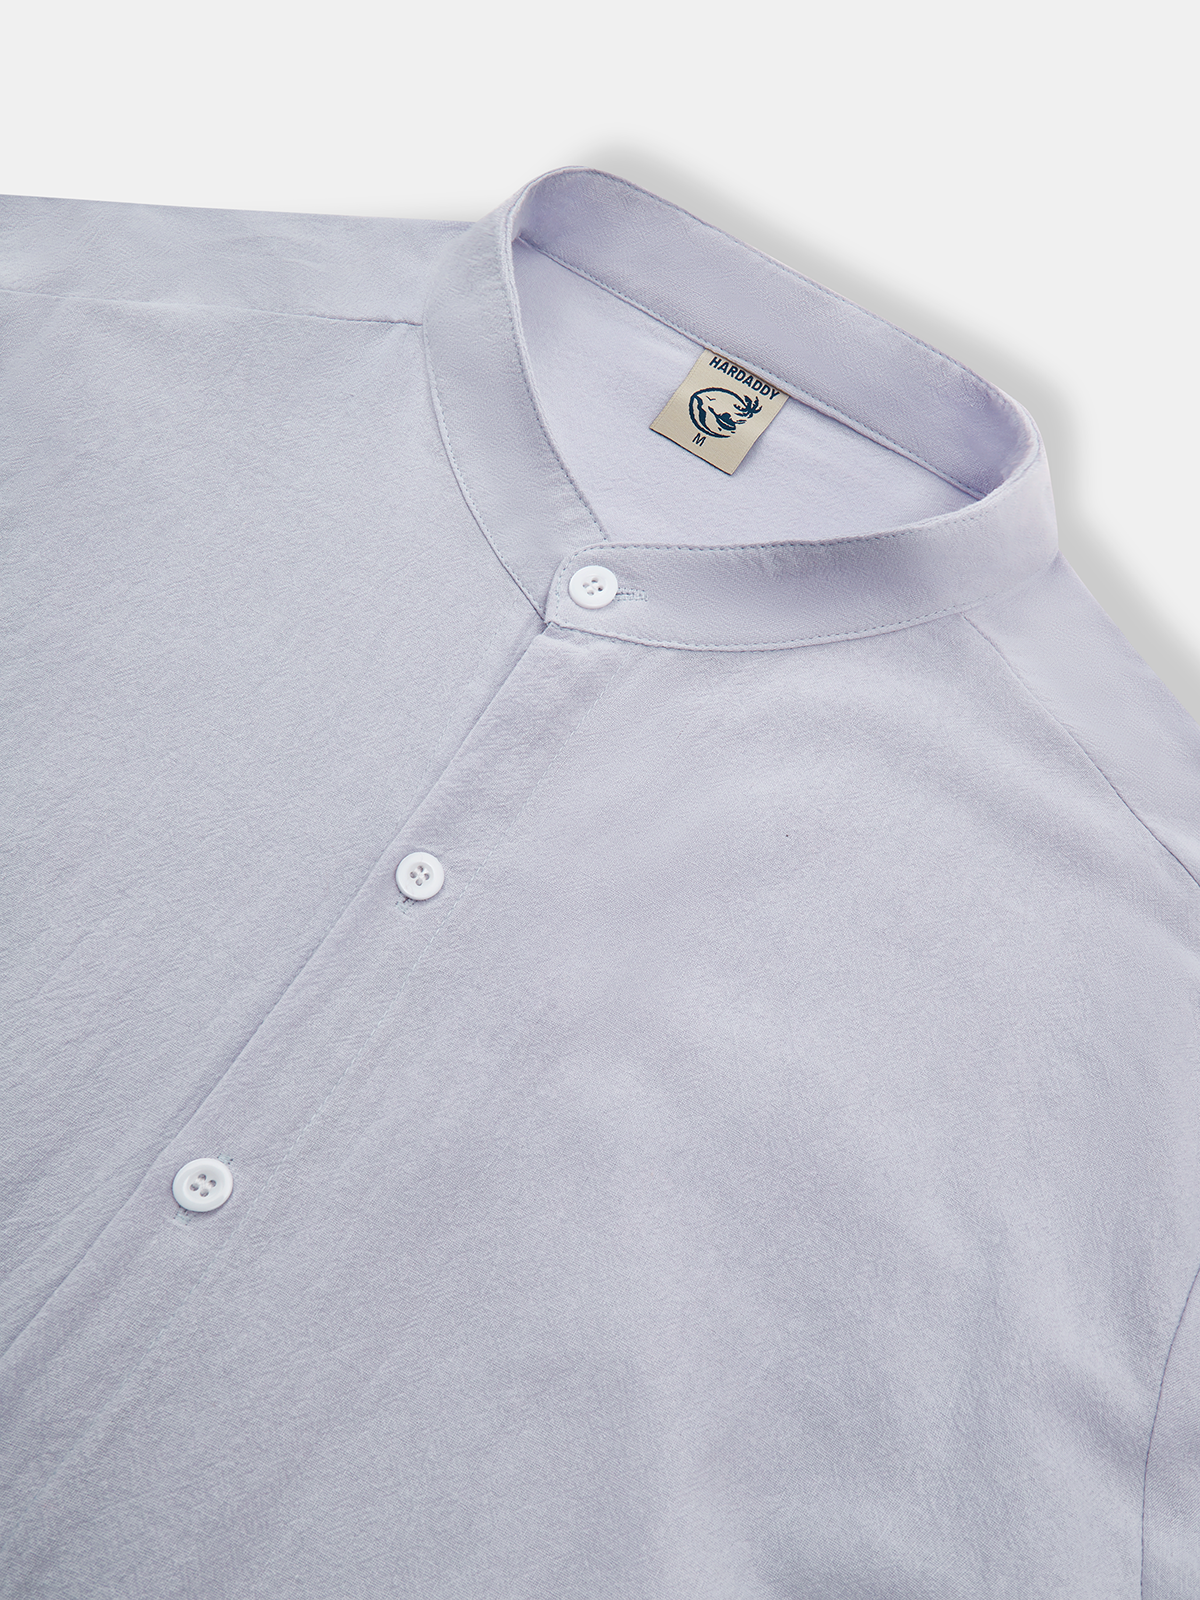 Plain Cotton Long Sleeve Casual Shirt